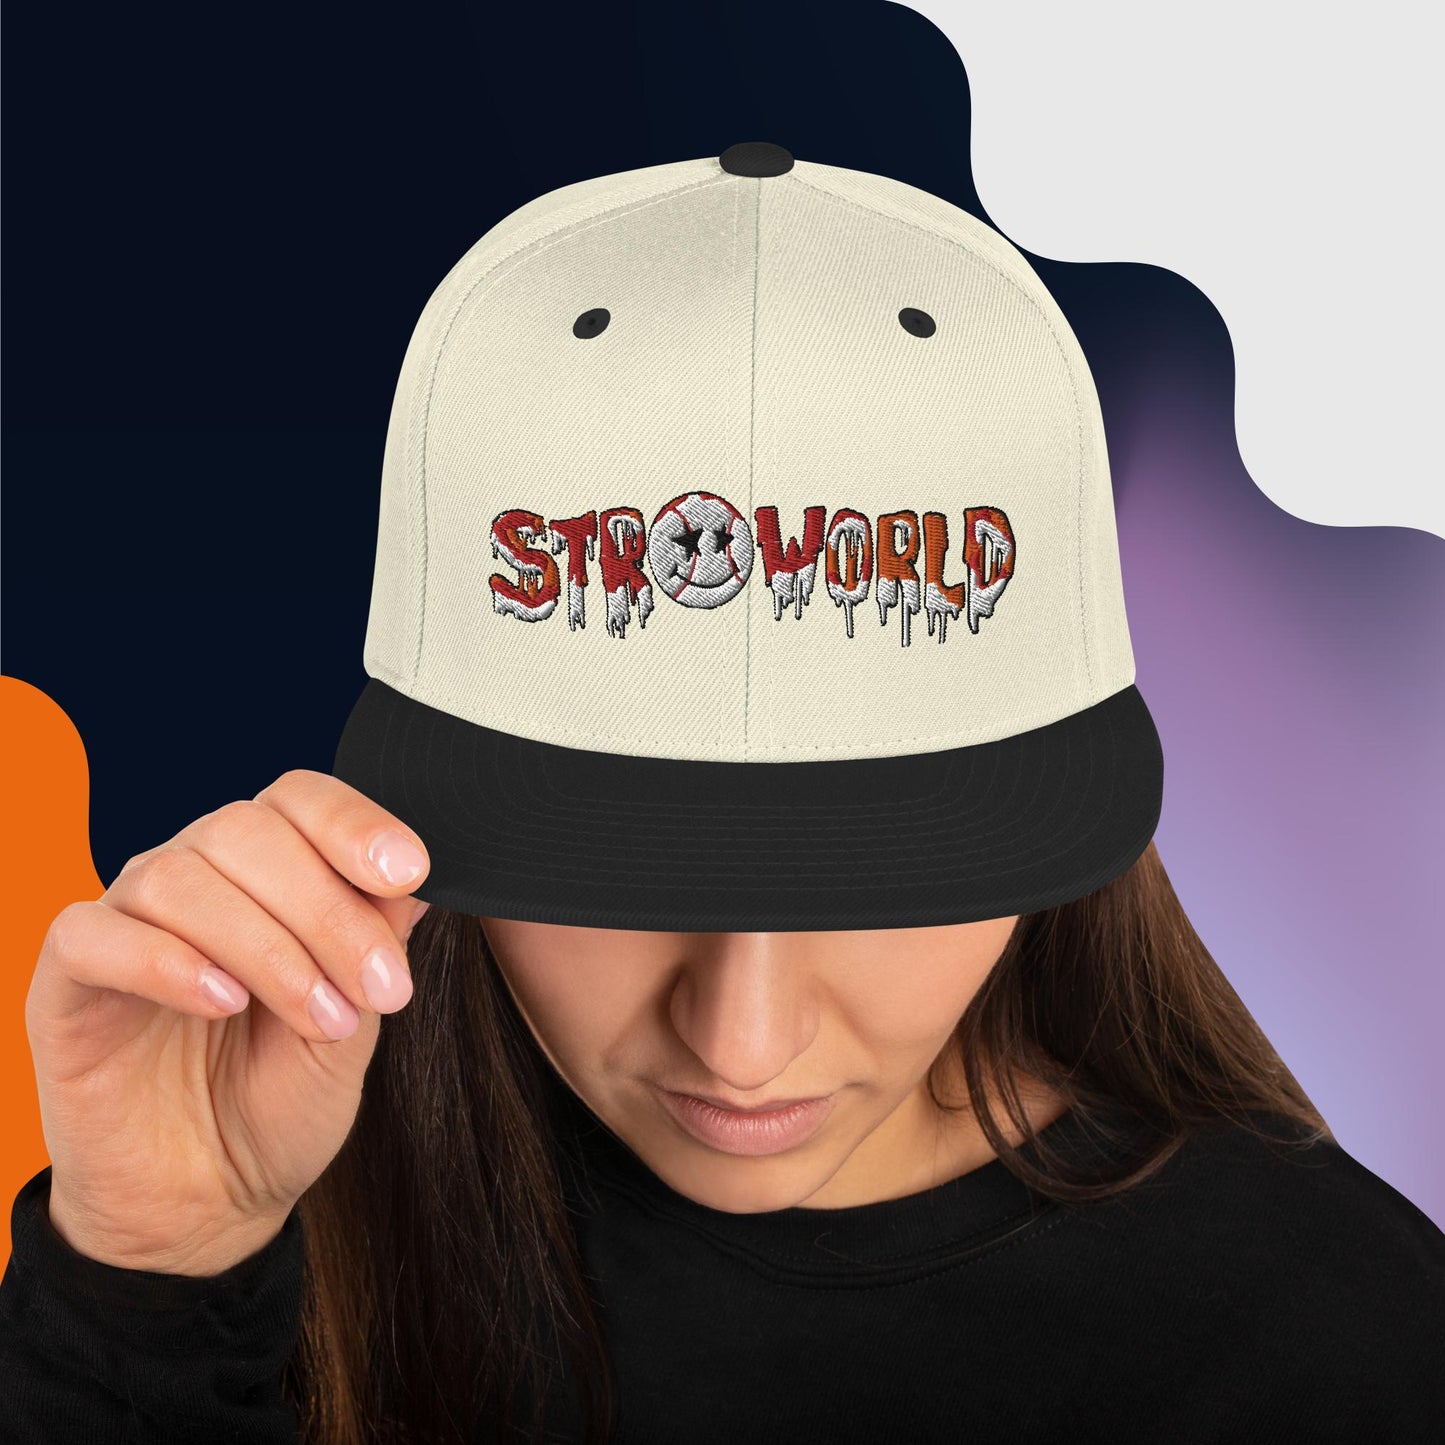 STROWORLD Snapback Hat